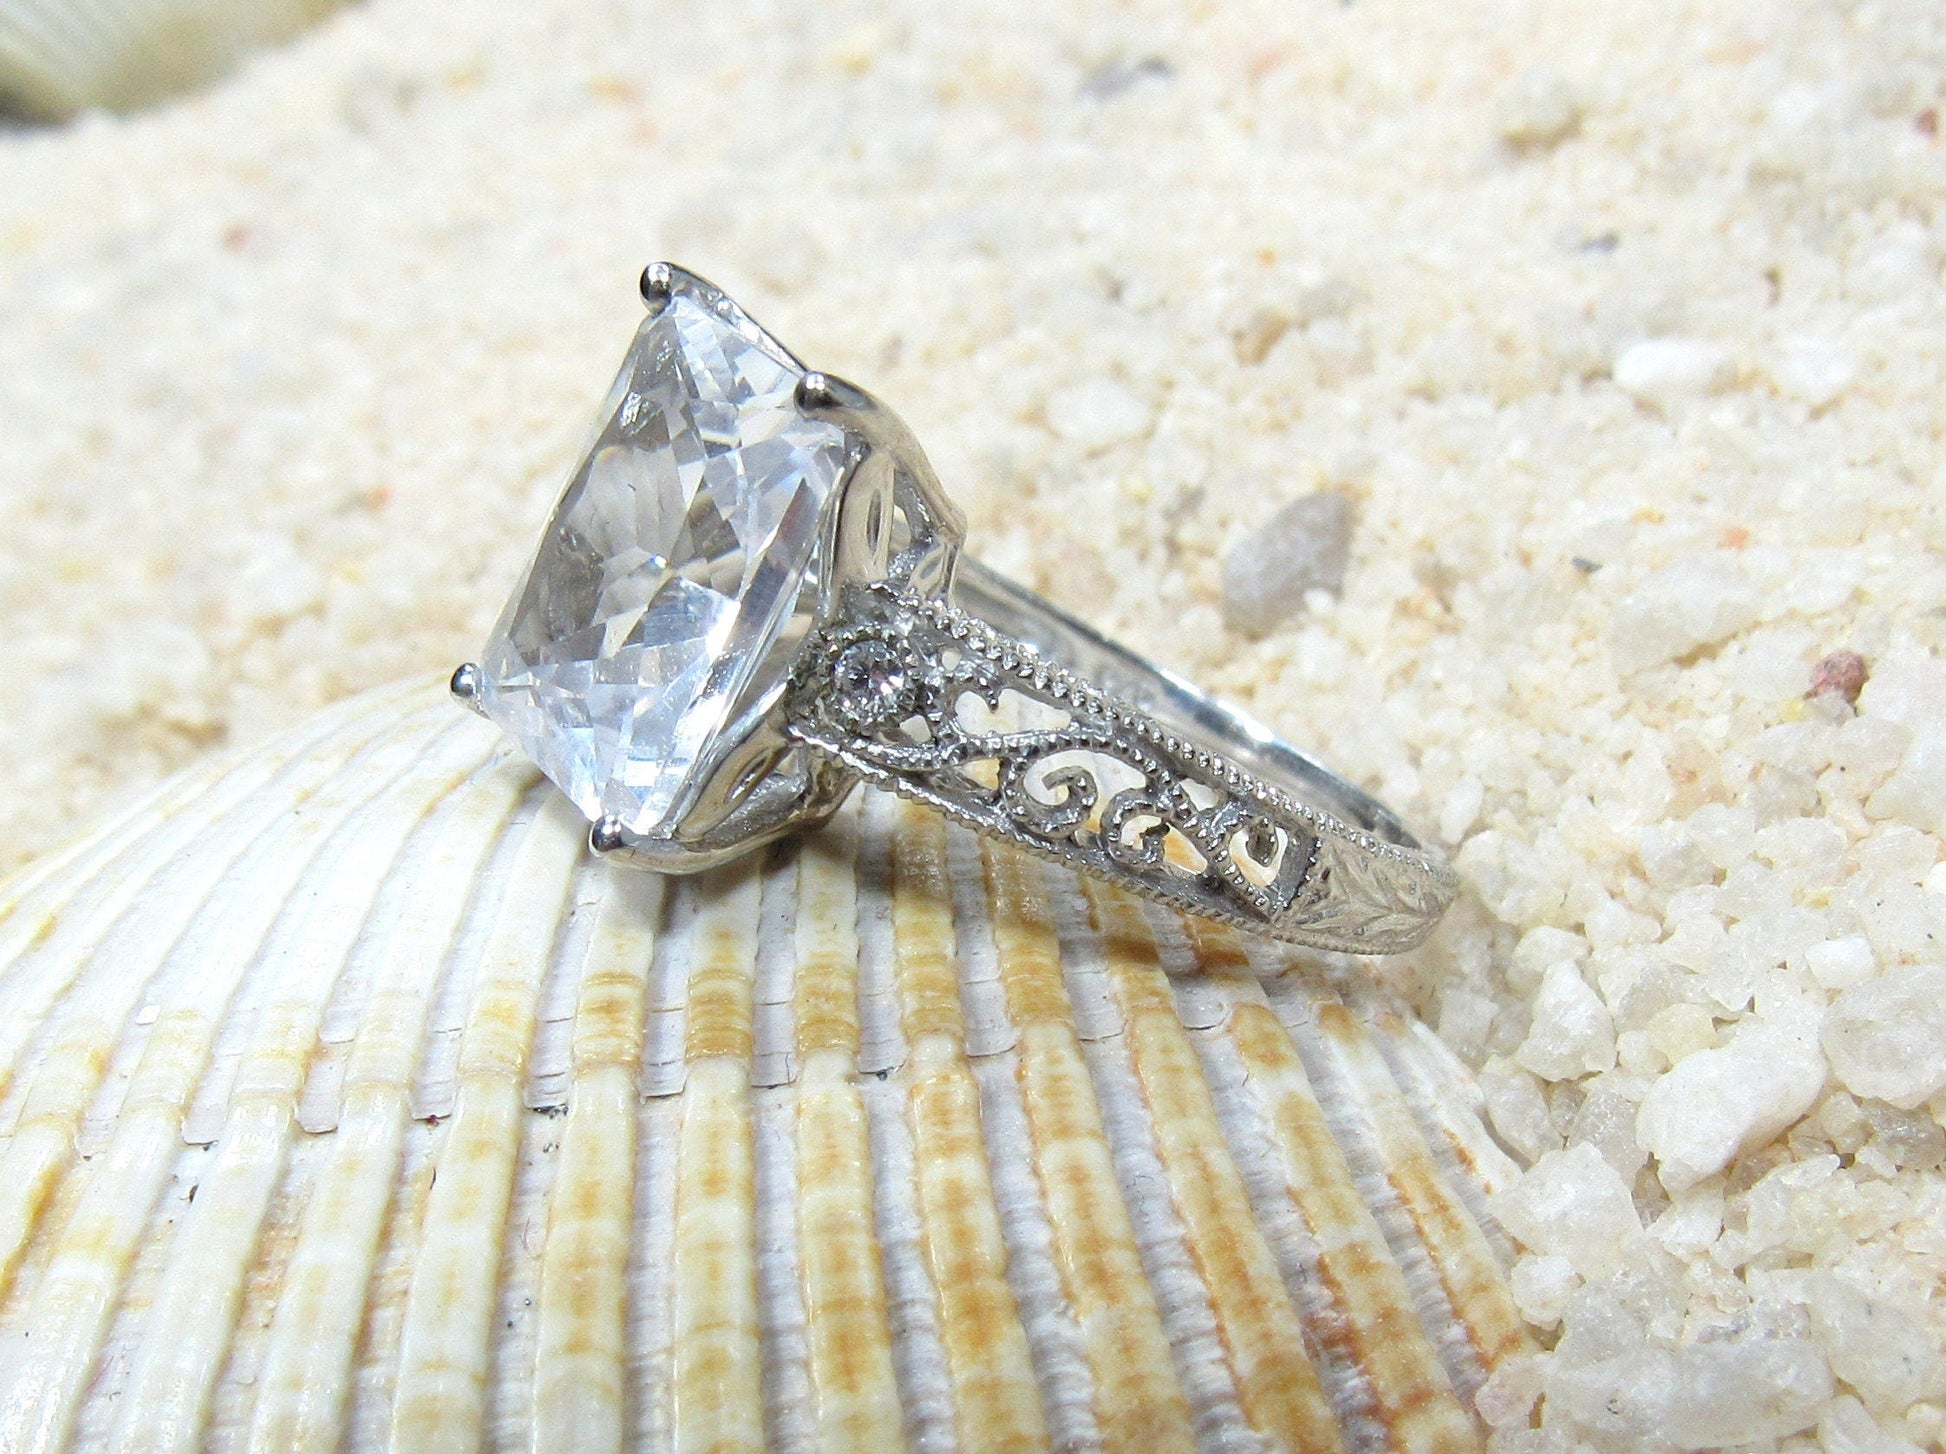 Black Spinel & Diamonds Engagement Ring, Polymnia, Vintage, Antique, Filigree, Milgrain, 4ct, 10x8mm, Emerald Cut BellaMoreDesign.com